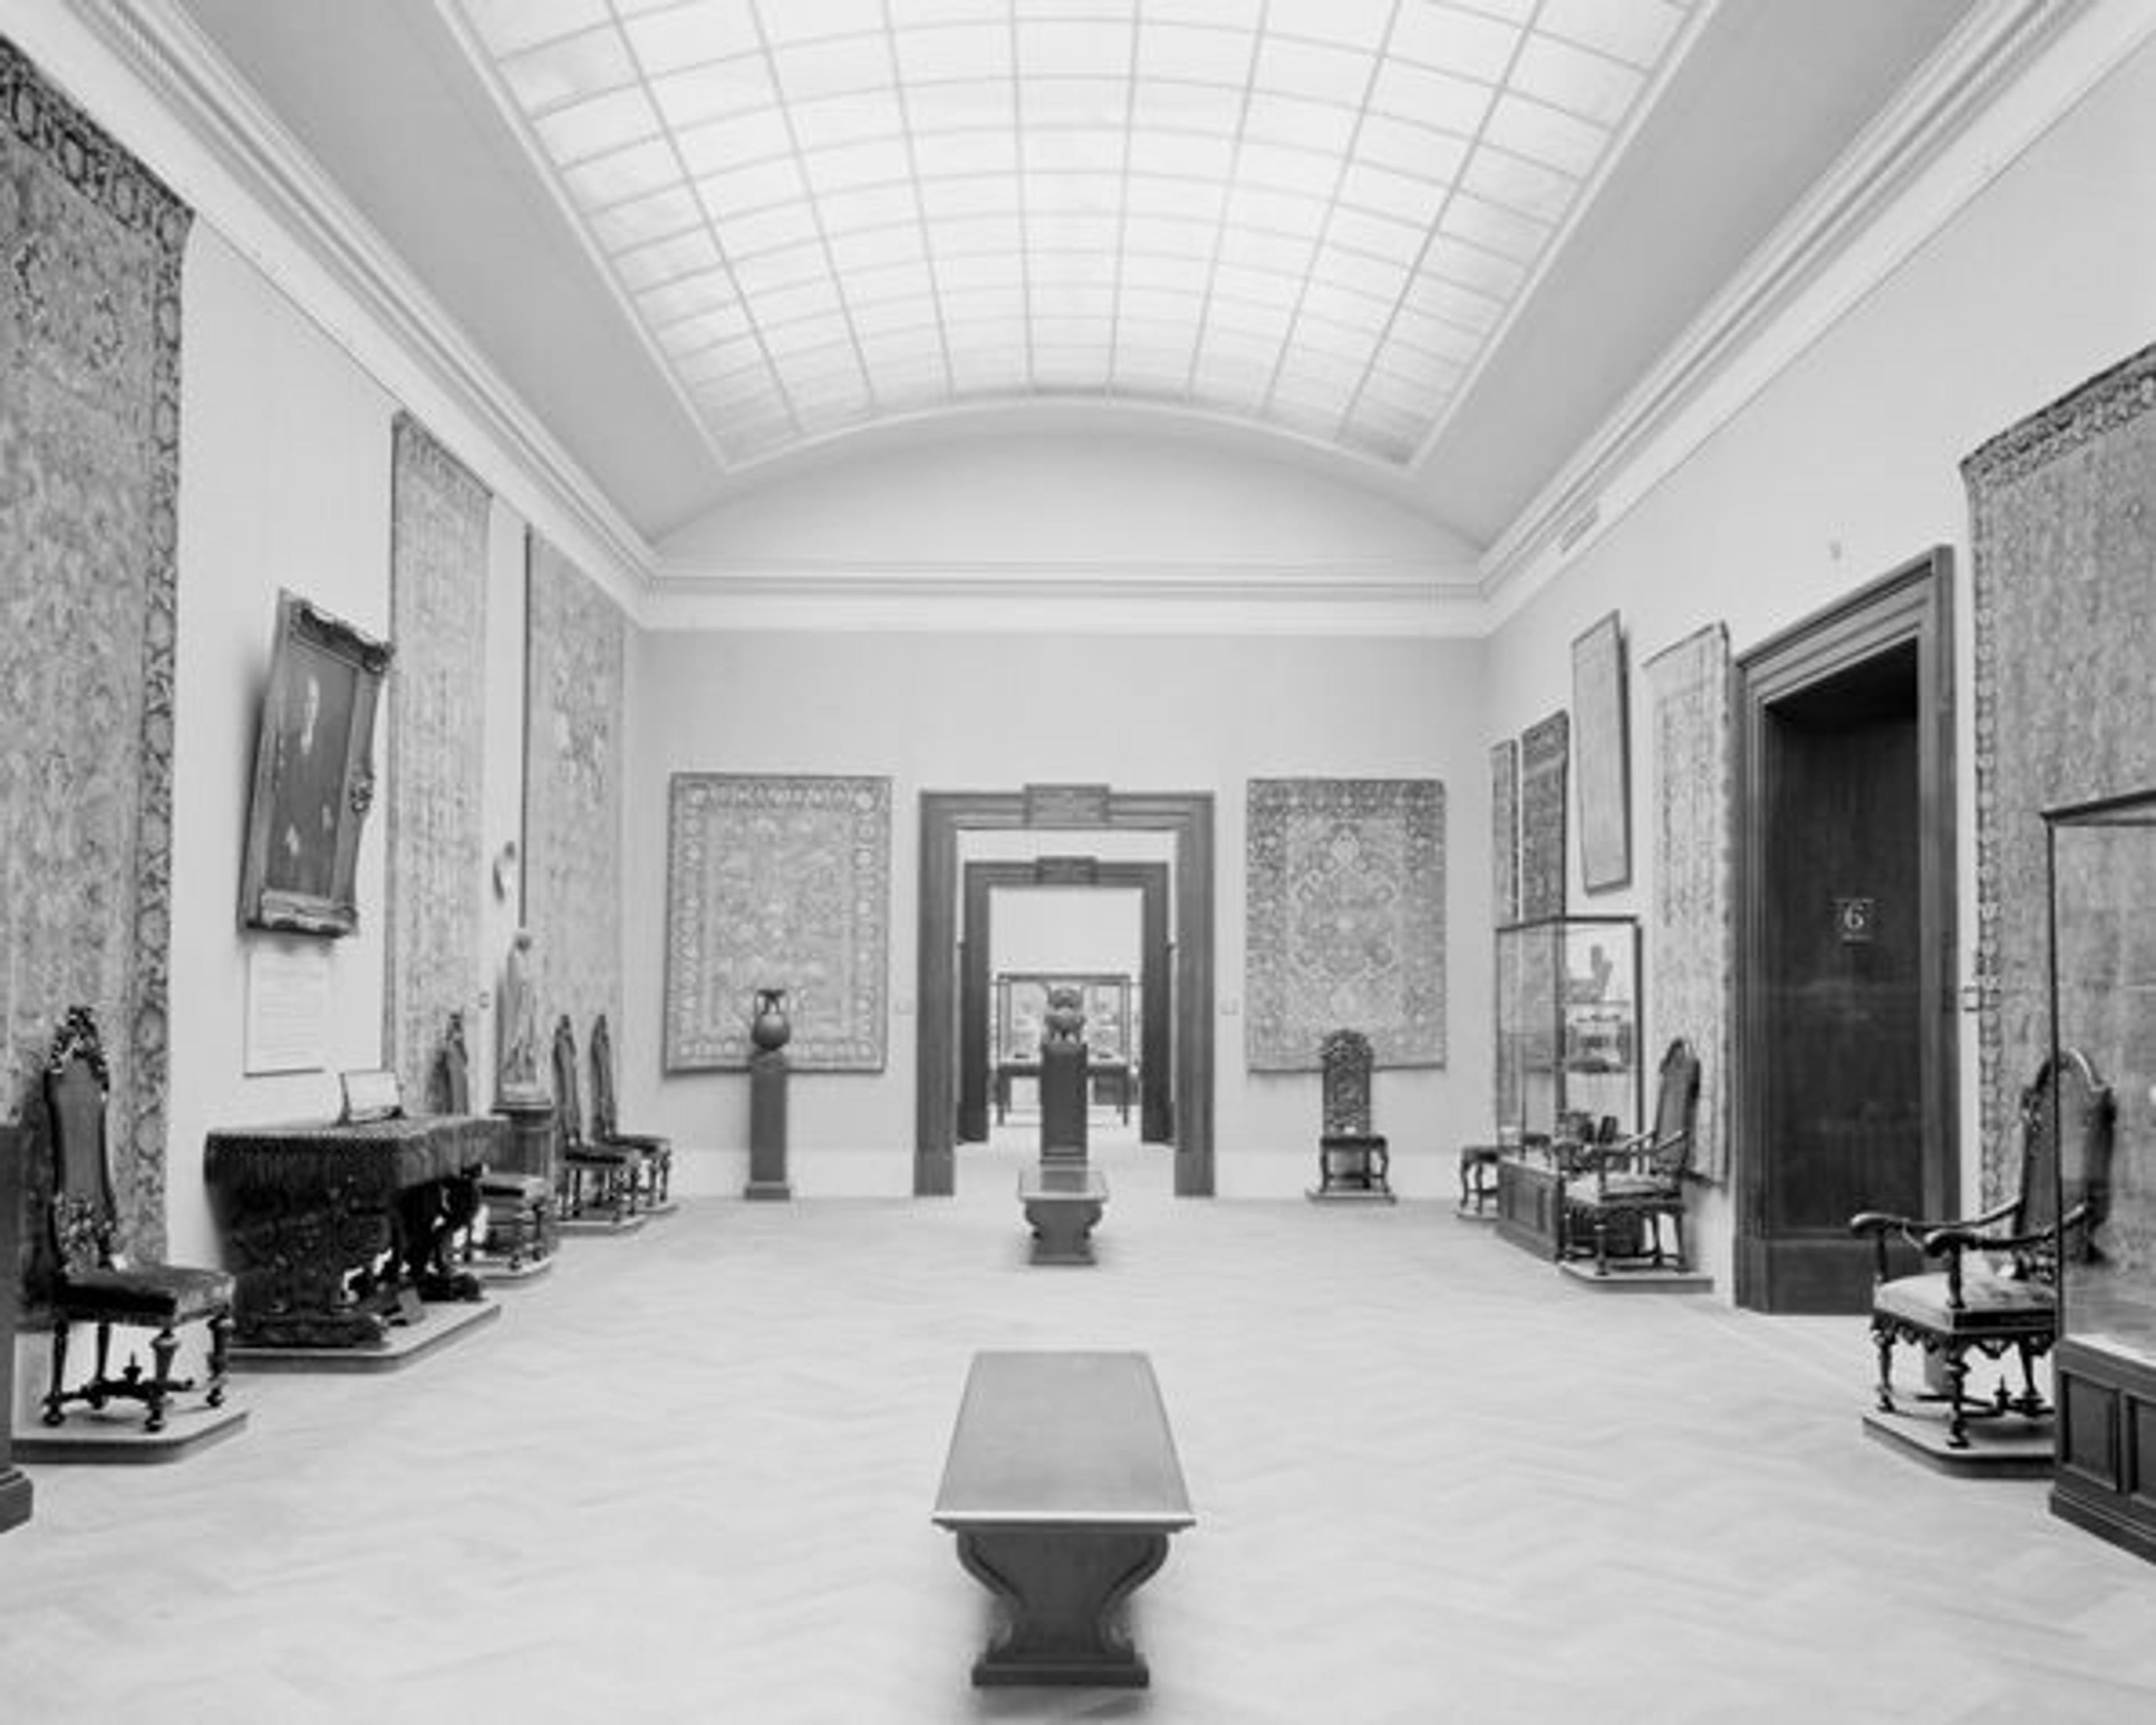 Gallery K-33, 1926